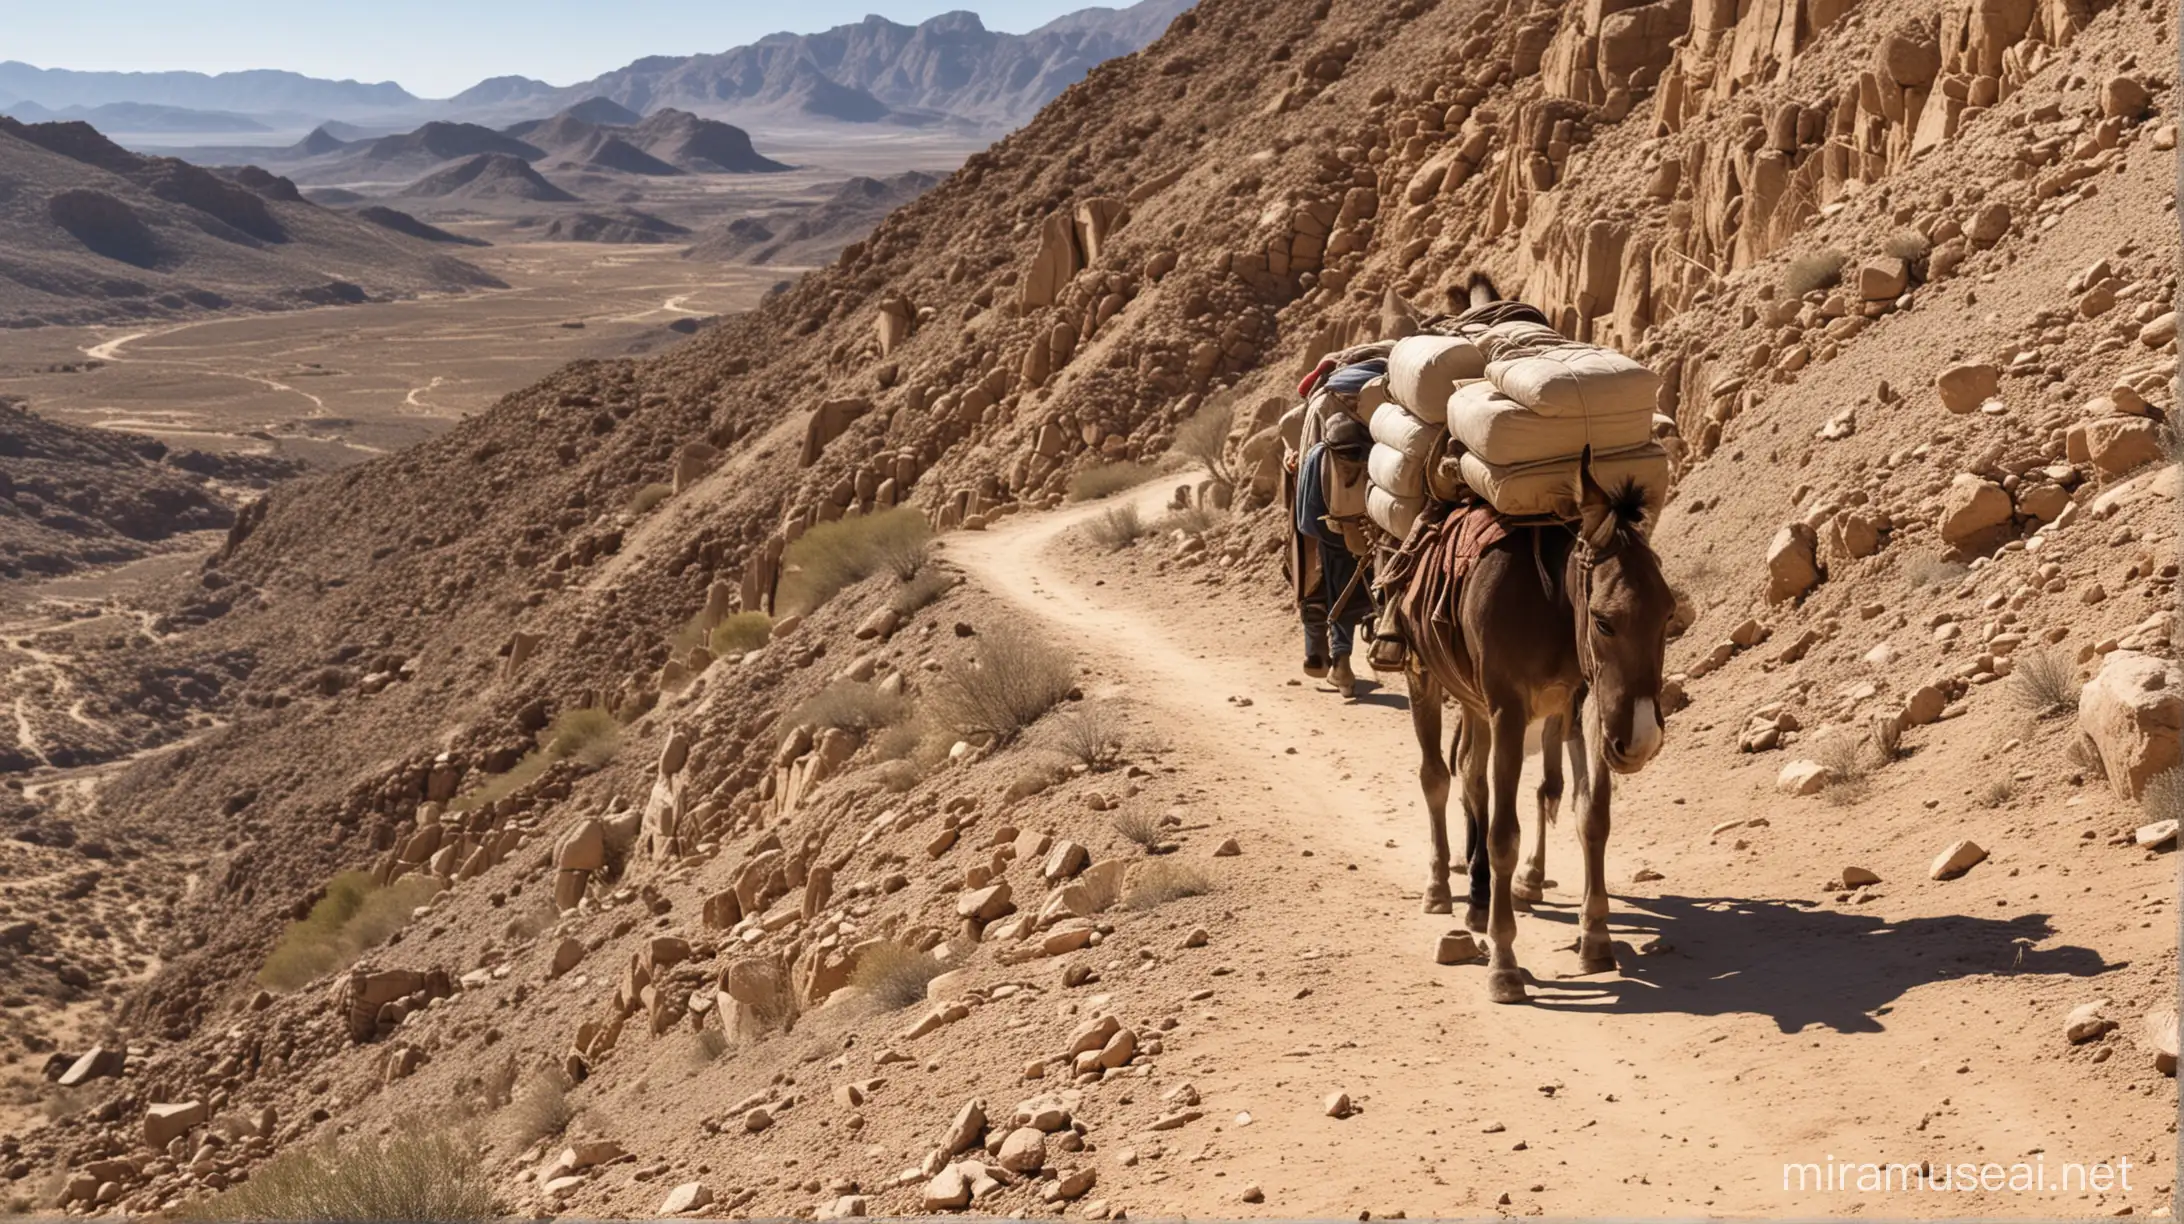 Moses Era Man and Boy Guide Laden Donkey through Desert Trail to Mountain